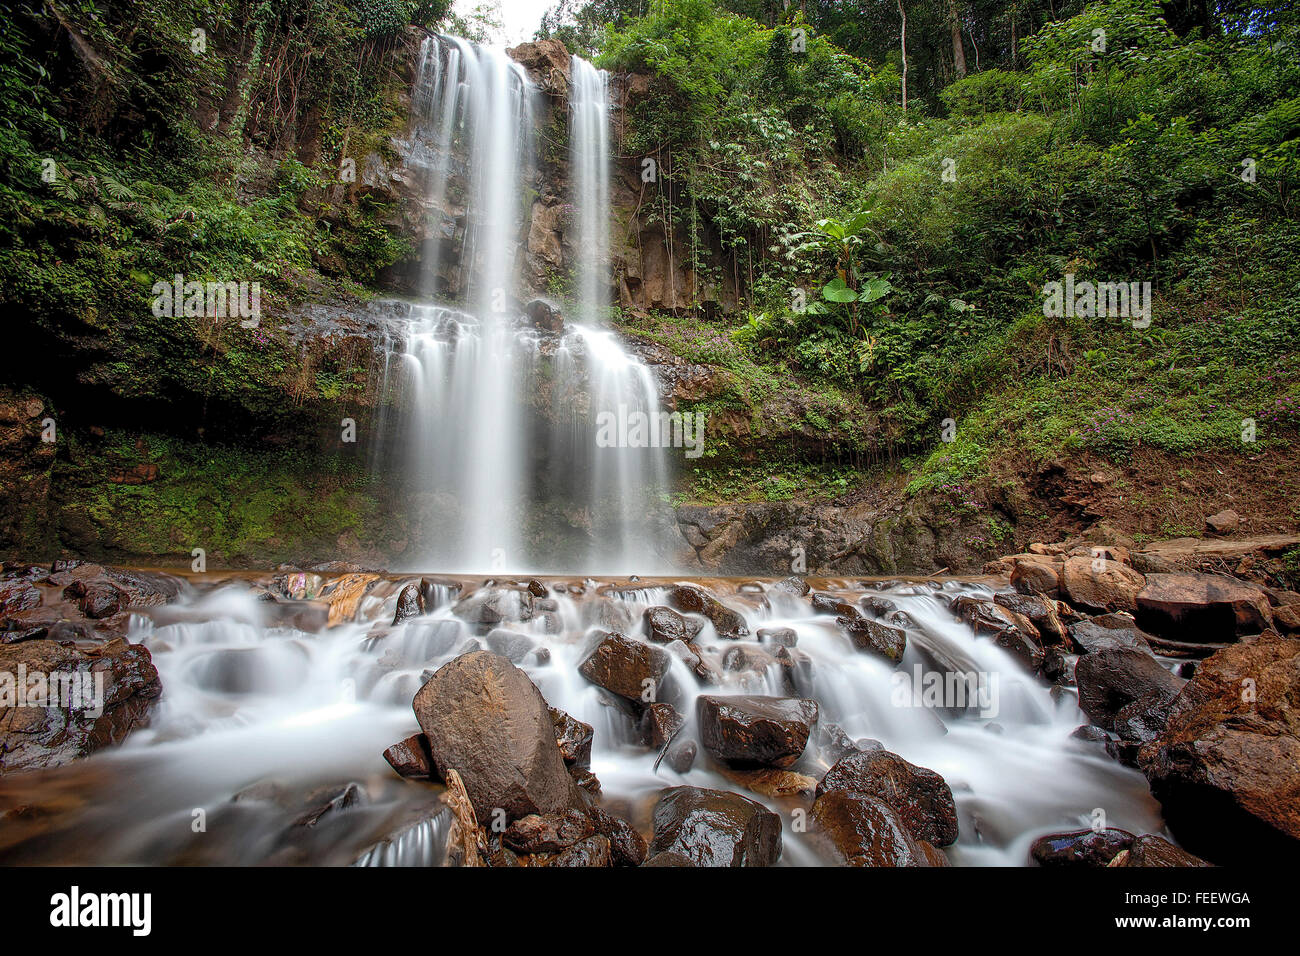 Damri Waterfall near Da Lat city in Vietnam. Stock Photo